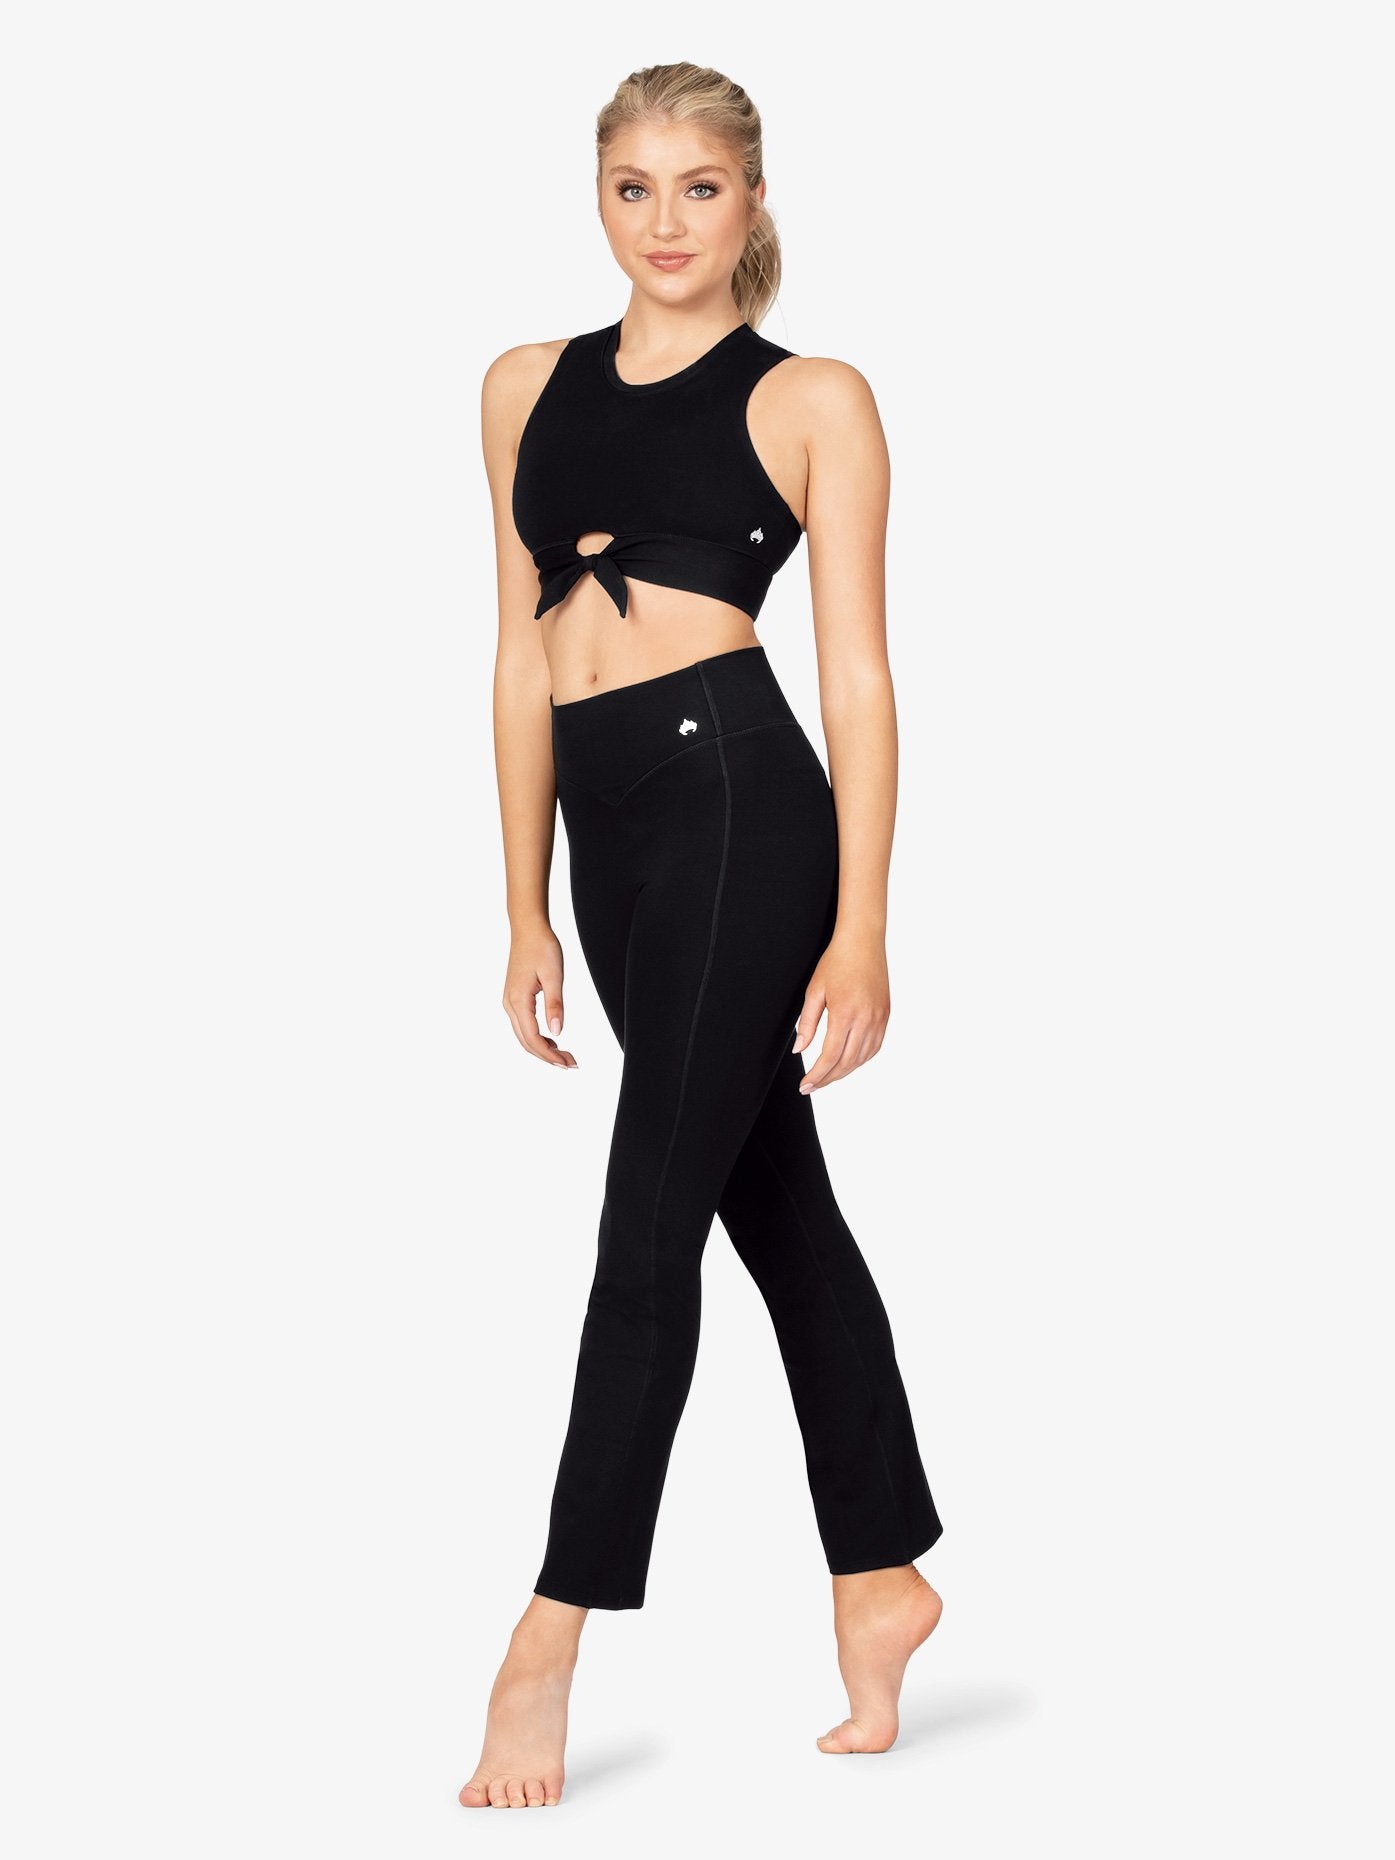 Women's straight cut bamboo black leggings 